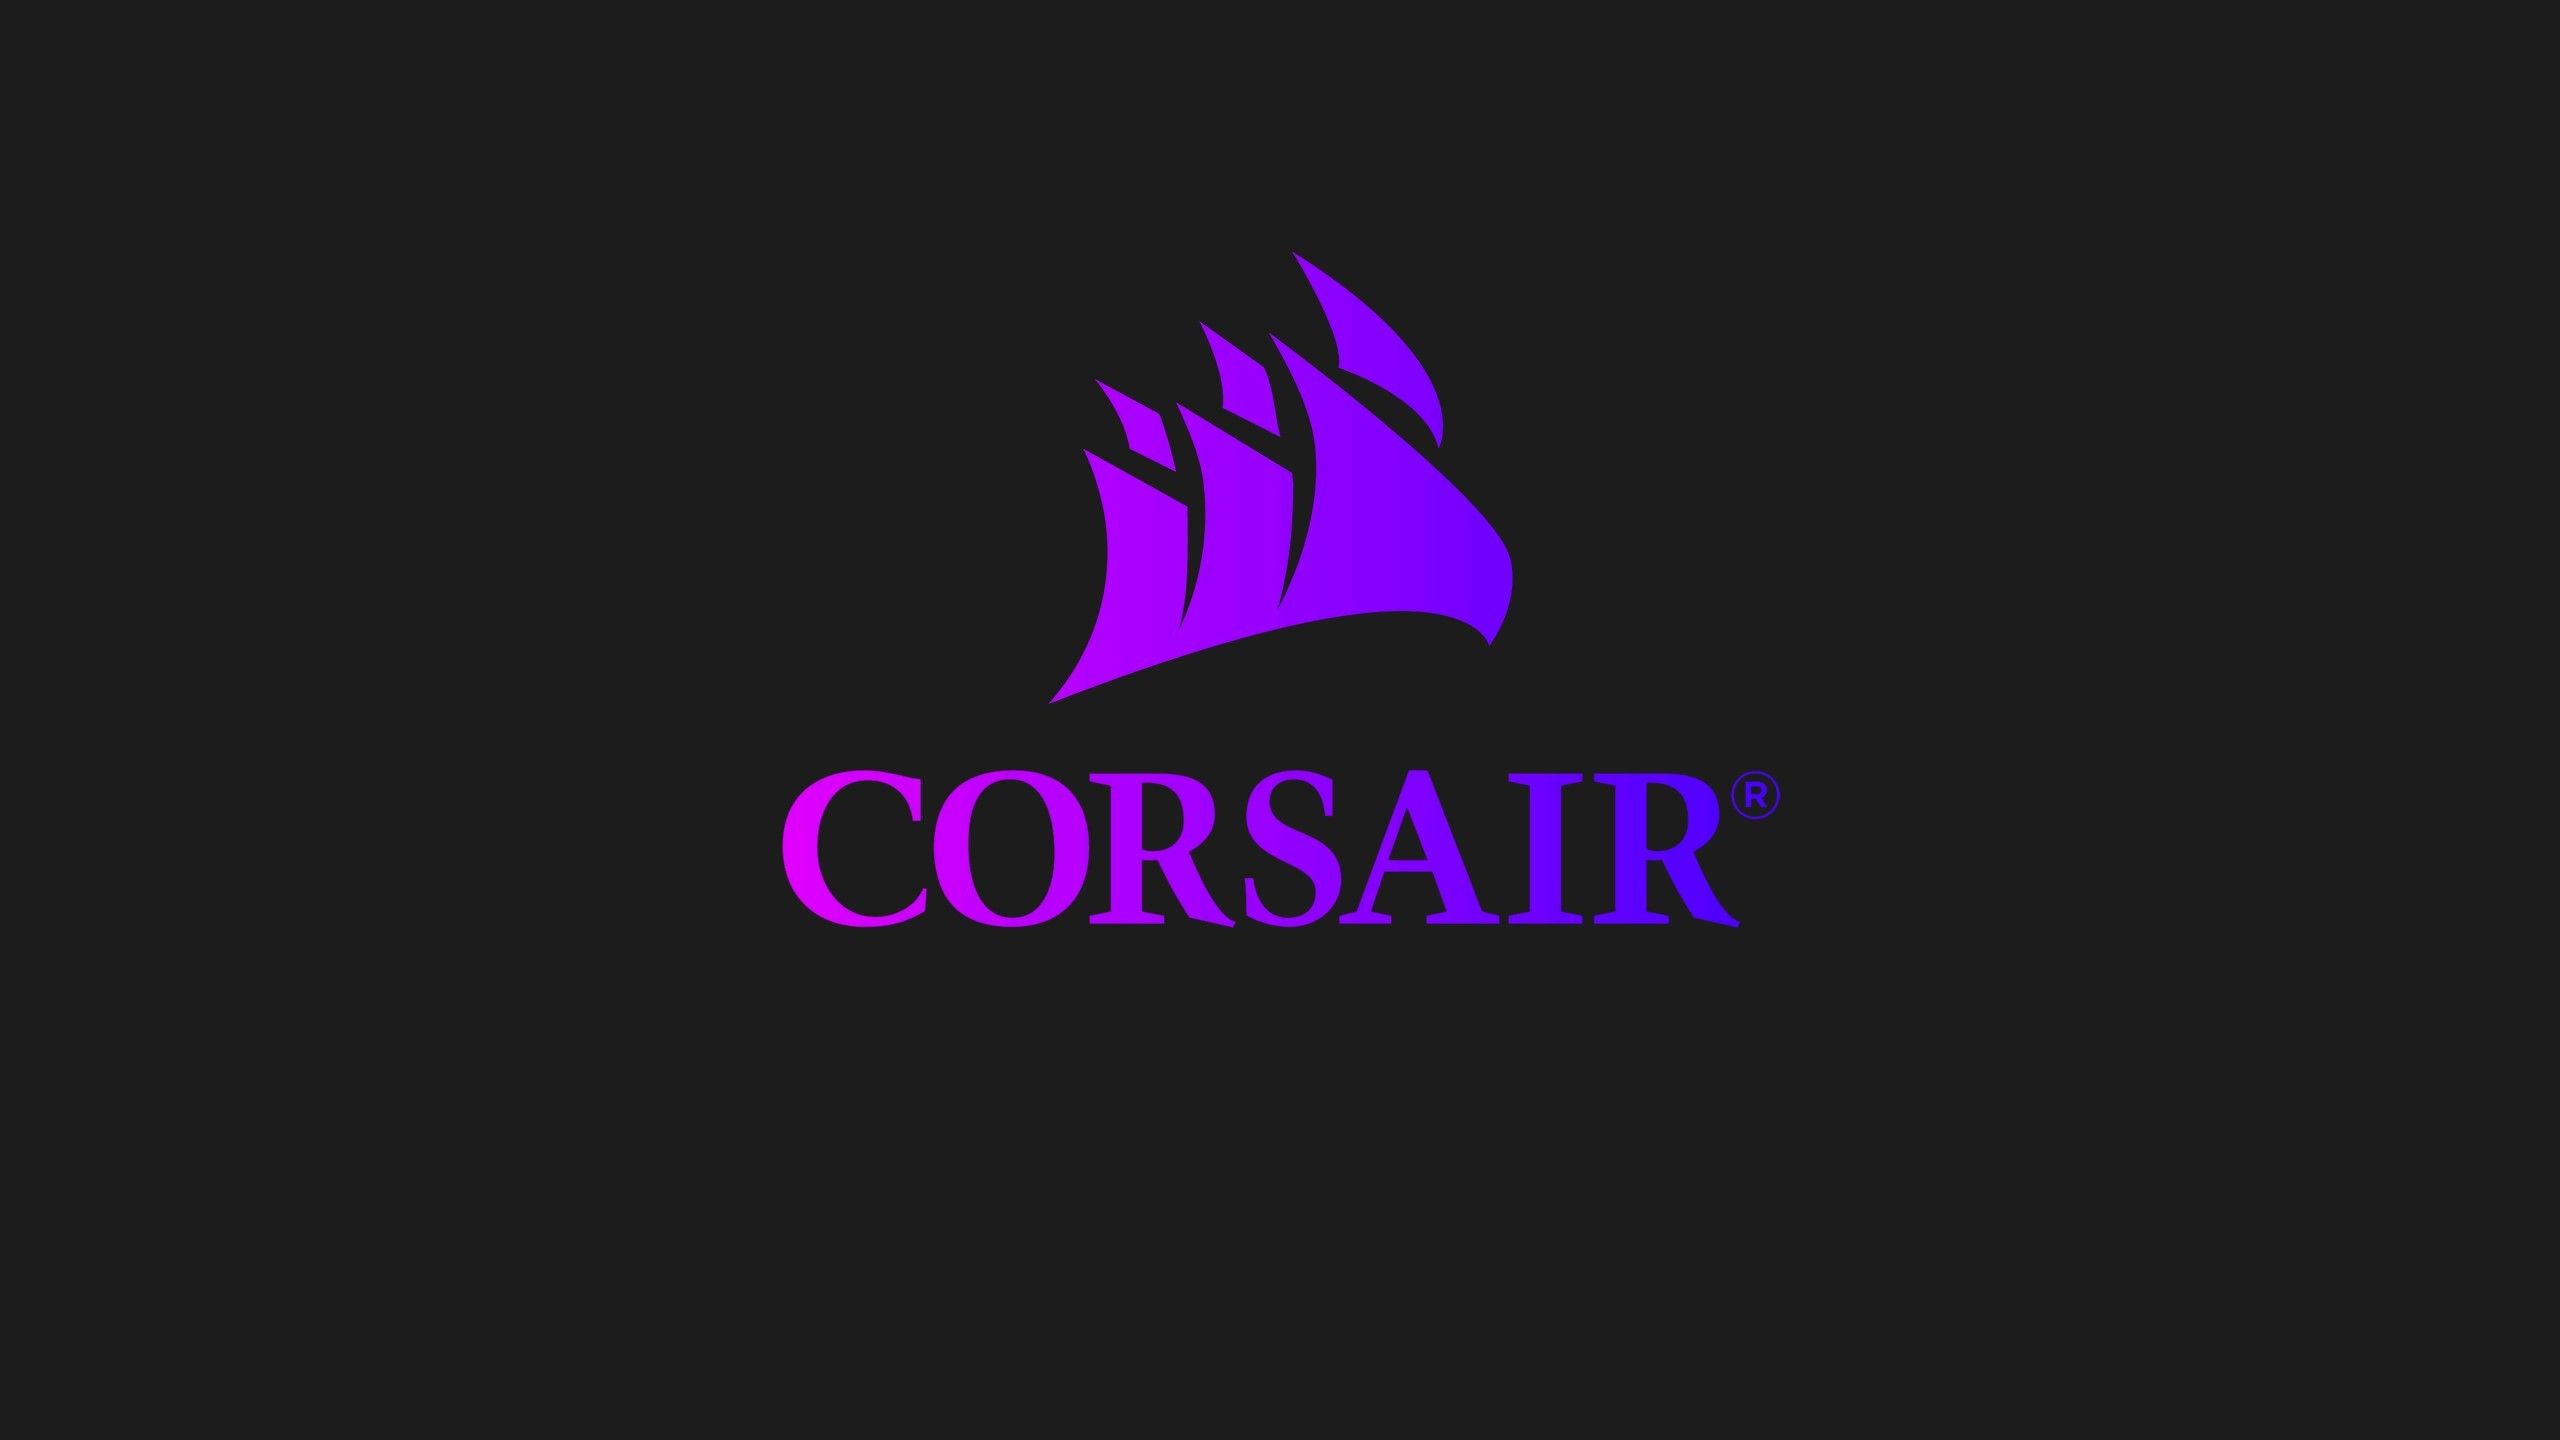 Corsair Gaming Wallpaper on WallpaerChat